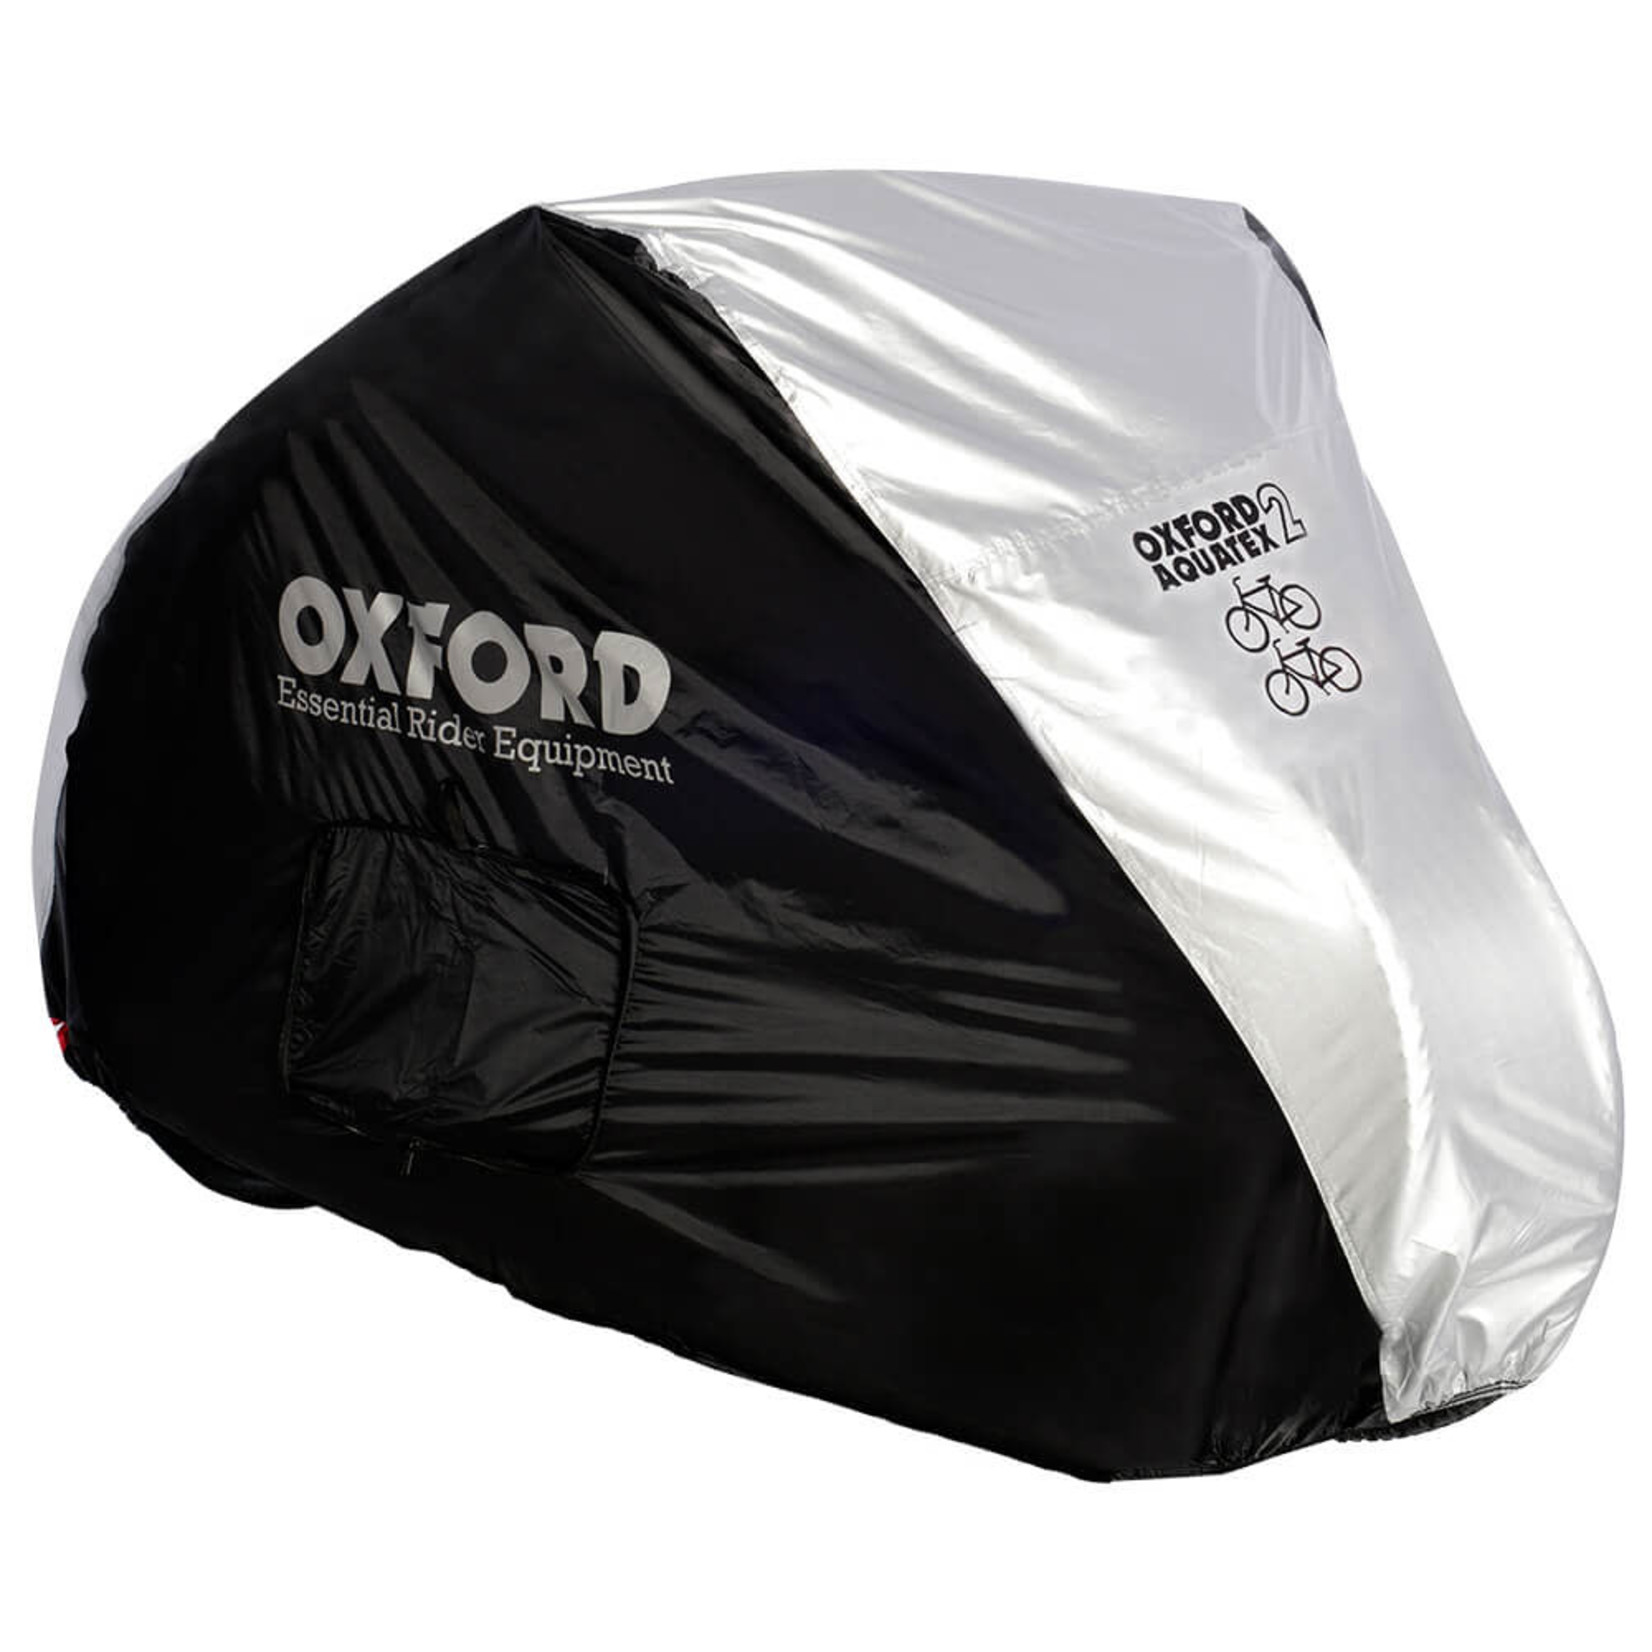 Oxford Aquatex Bicycle Cover -